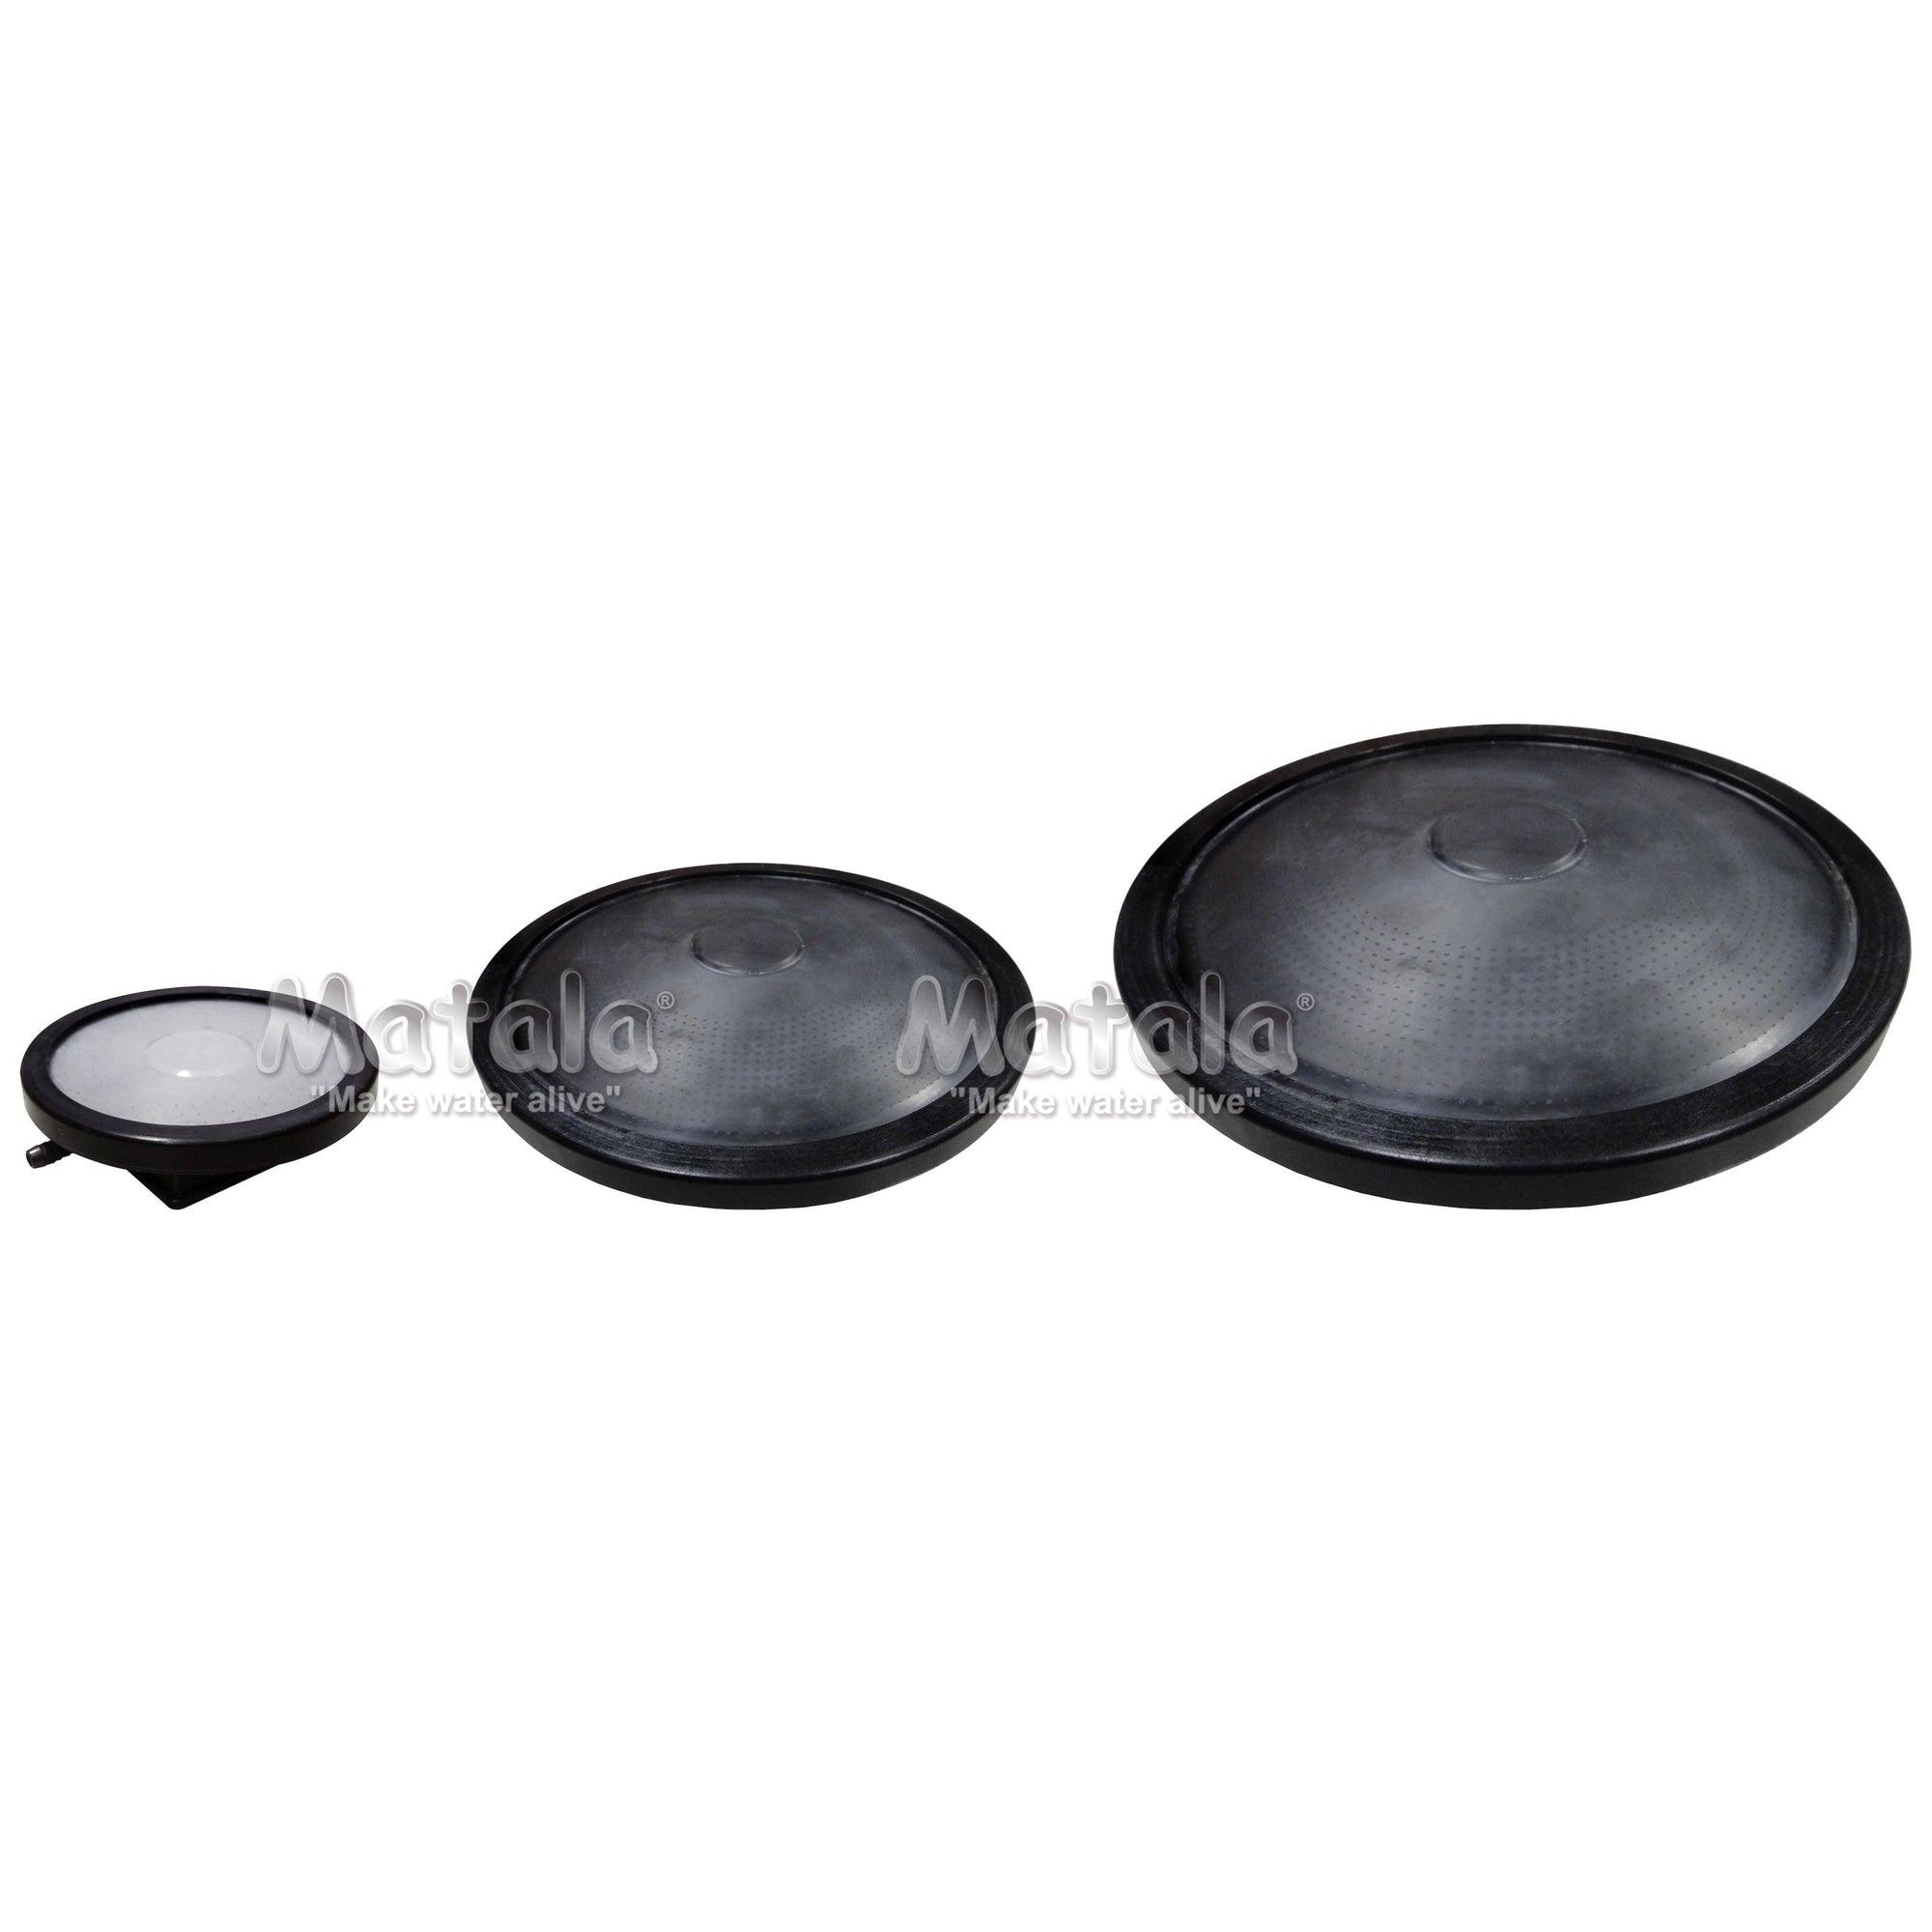 Matala Self-Weighted Air Diffuser Discs - Play It Koi